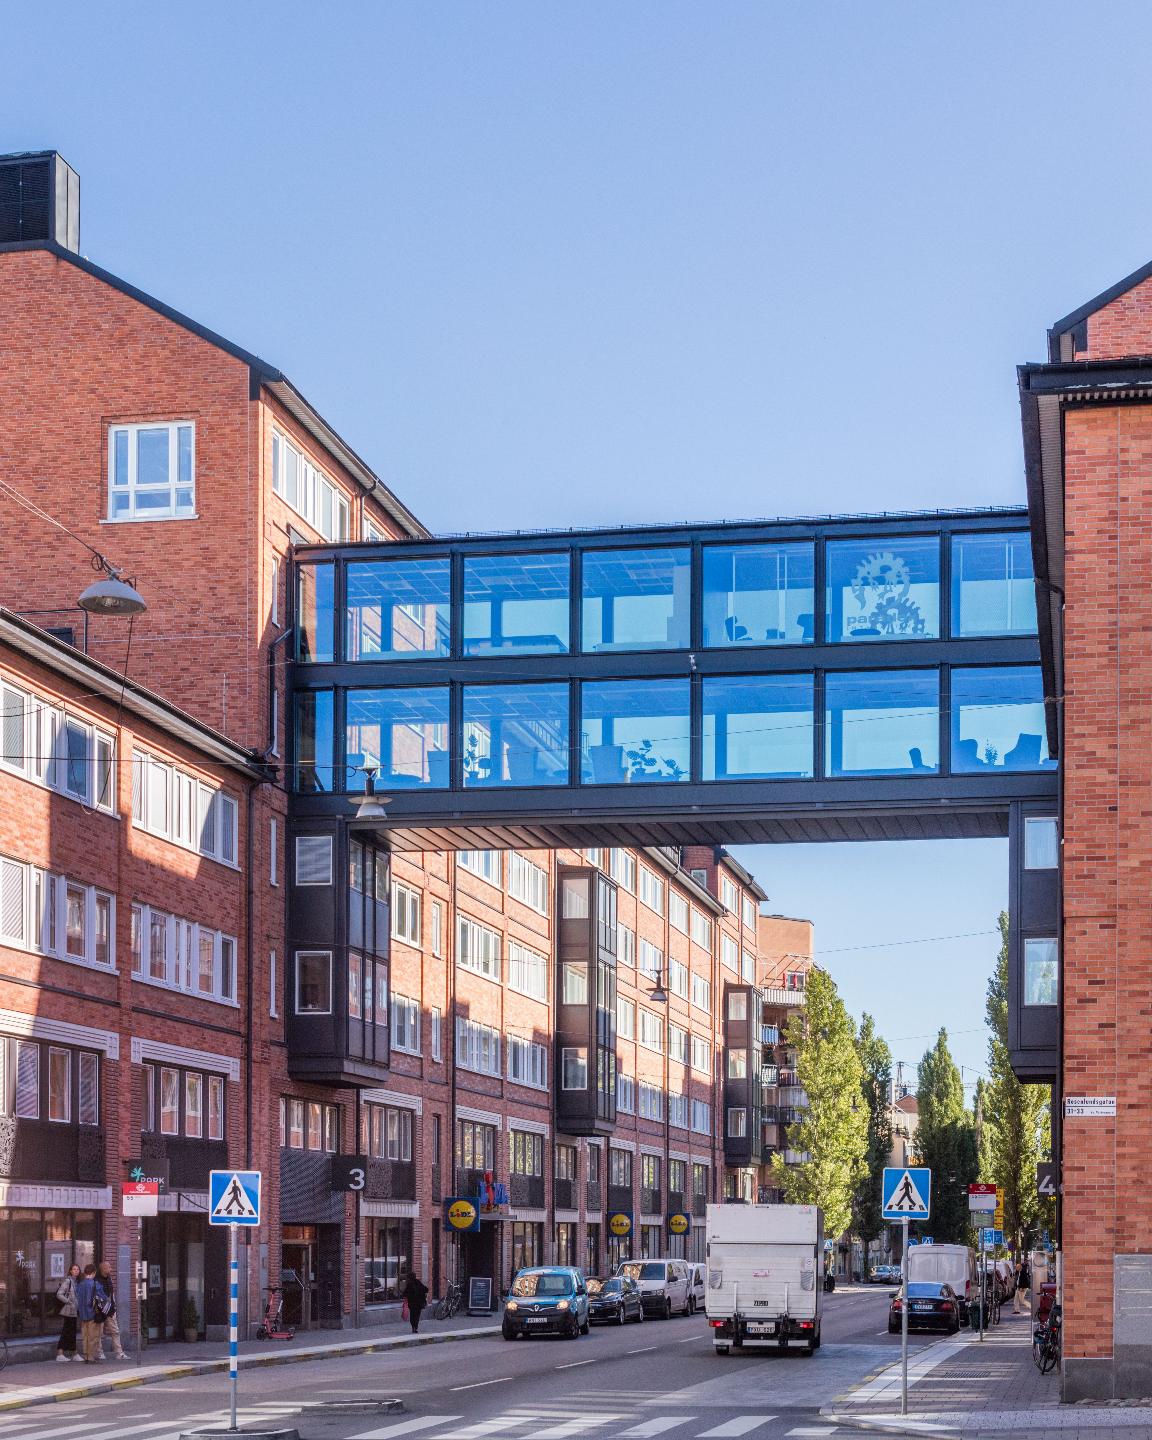 Bro mellan husen i Stockholmsverken